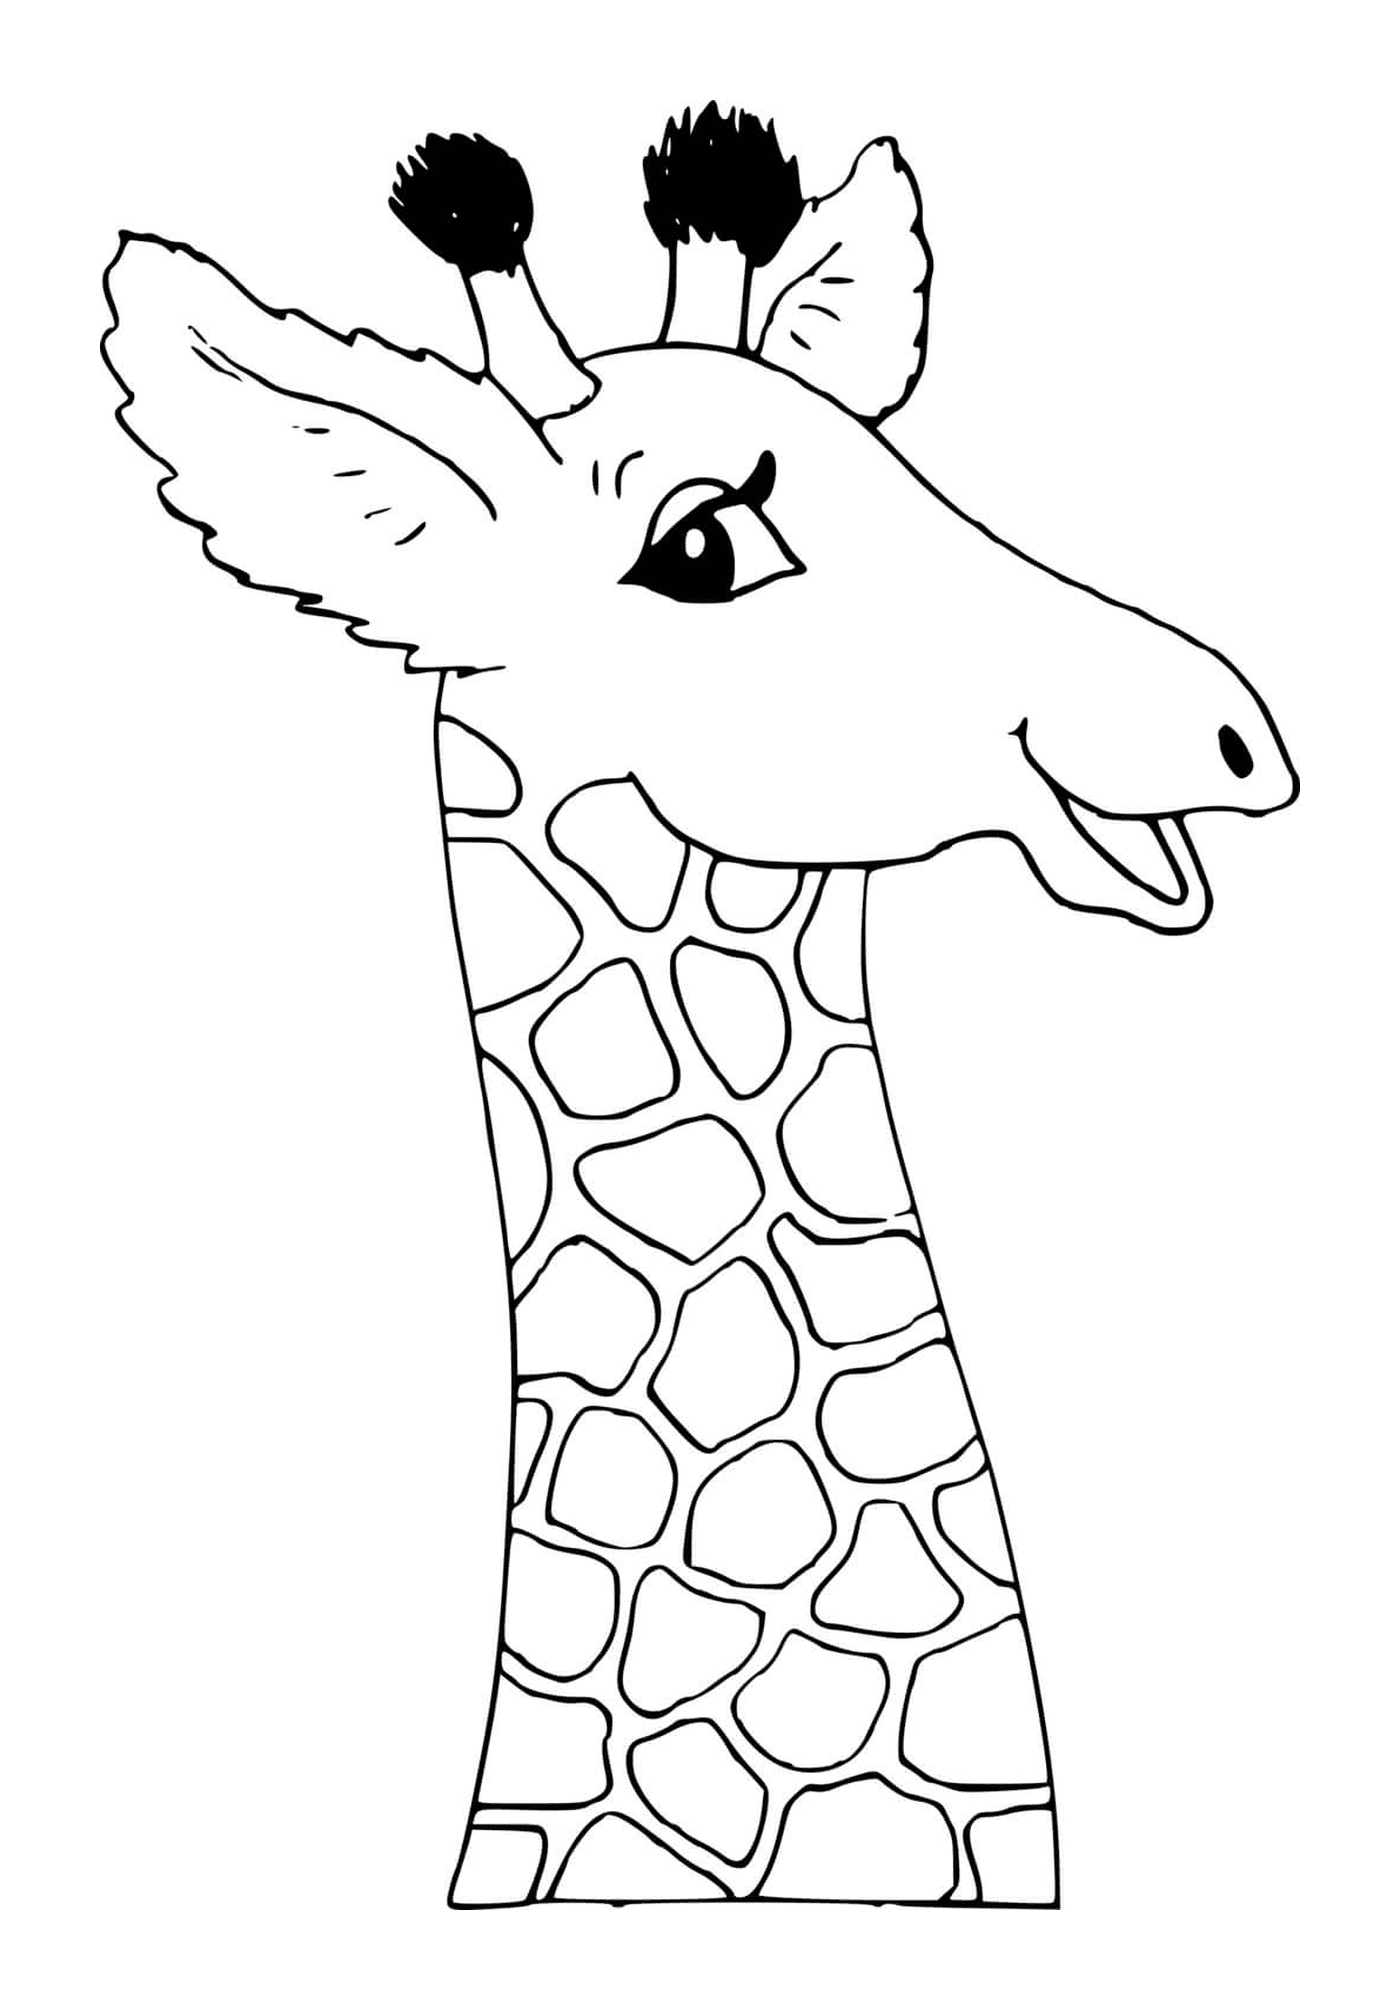  Neck and head of a giraffe 